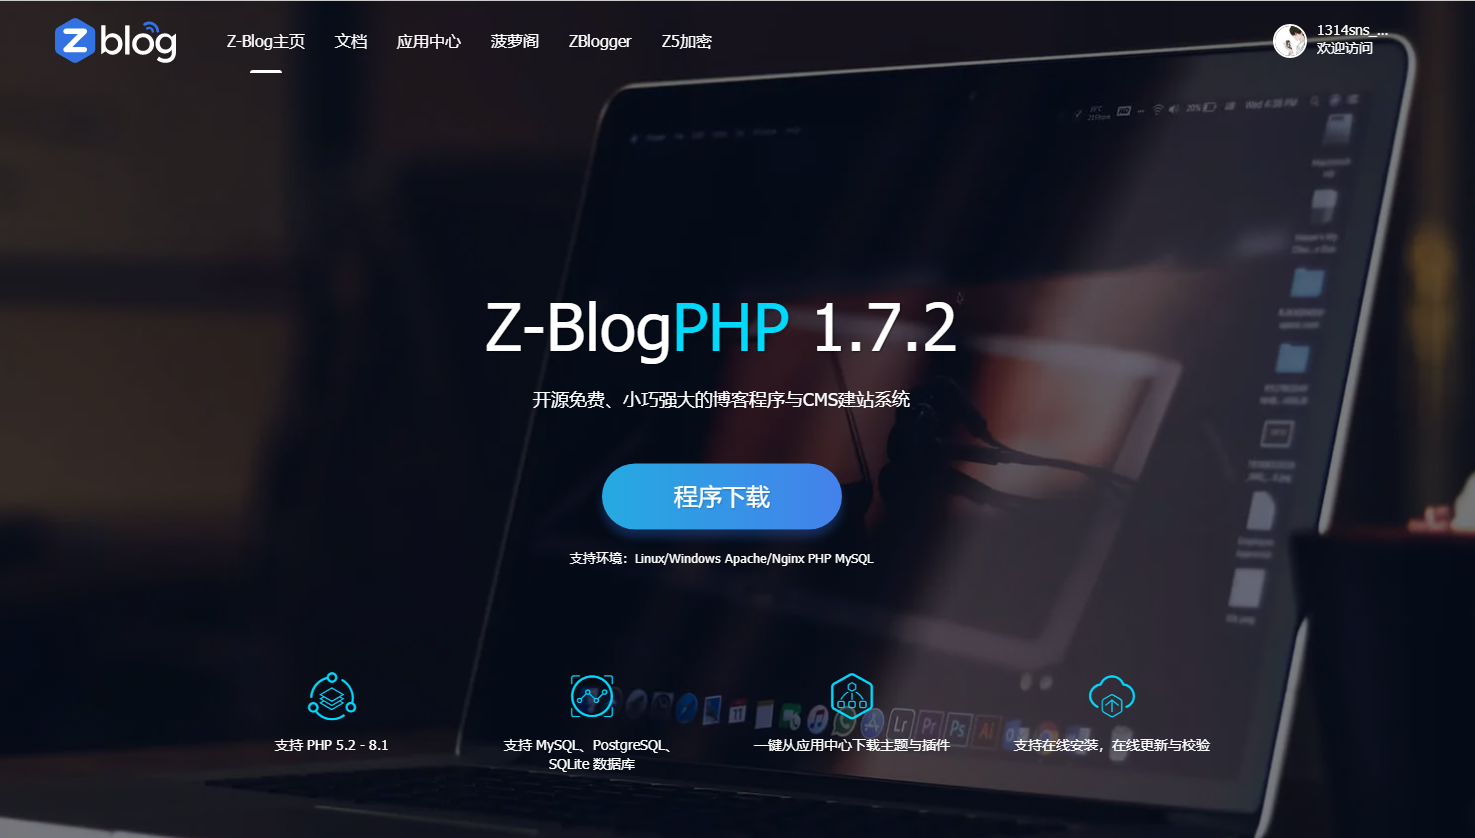 Z-BLOGPHP图文安装教程 手把手教你搭建zb博客网站